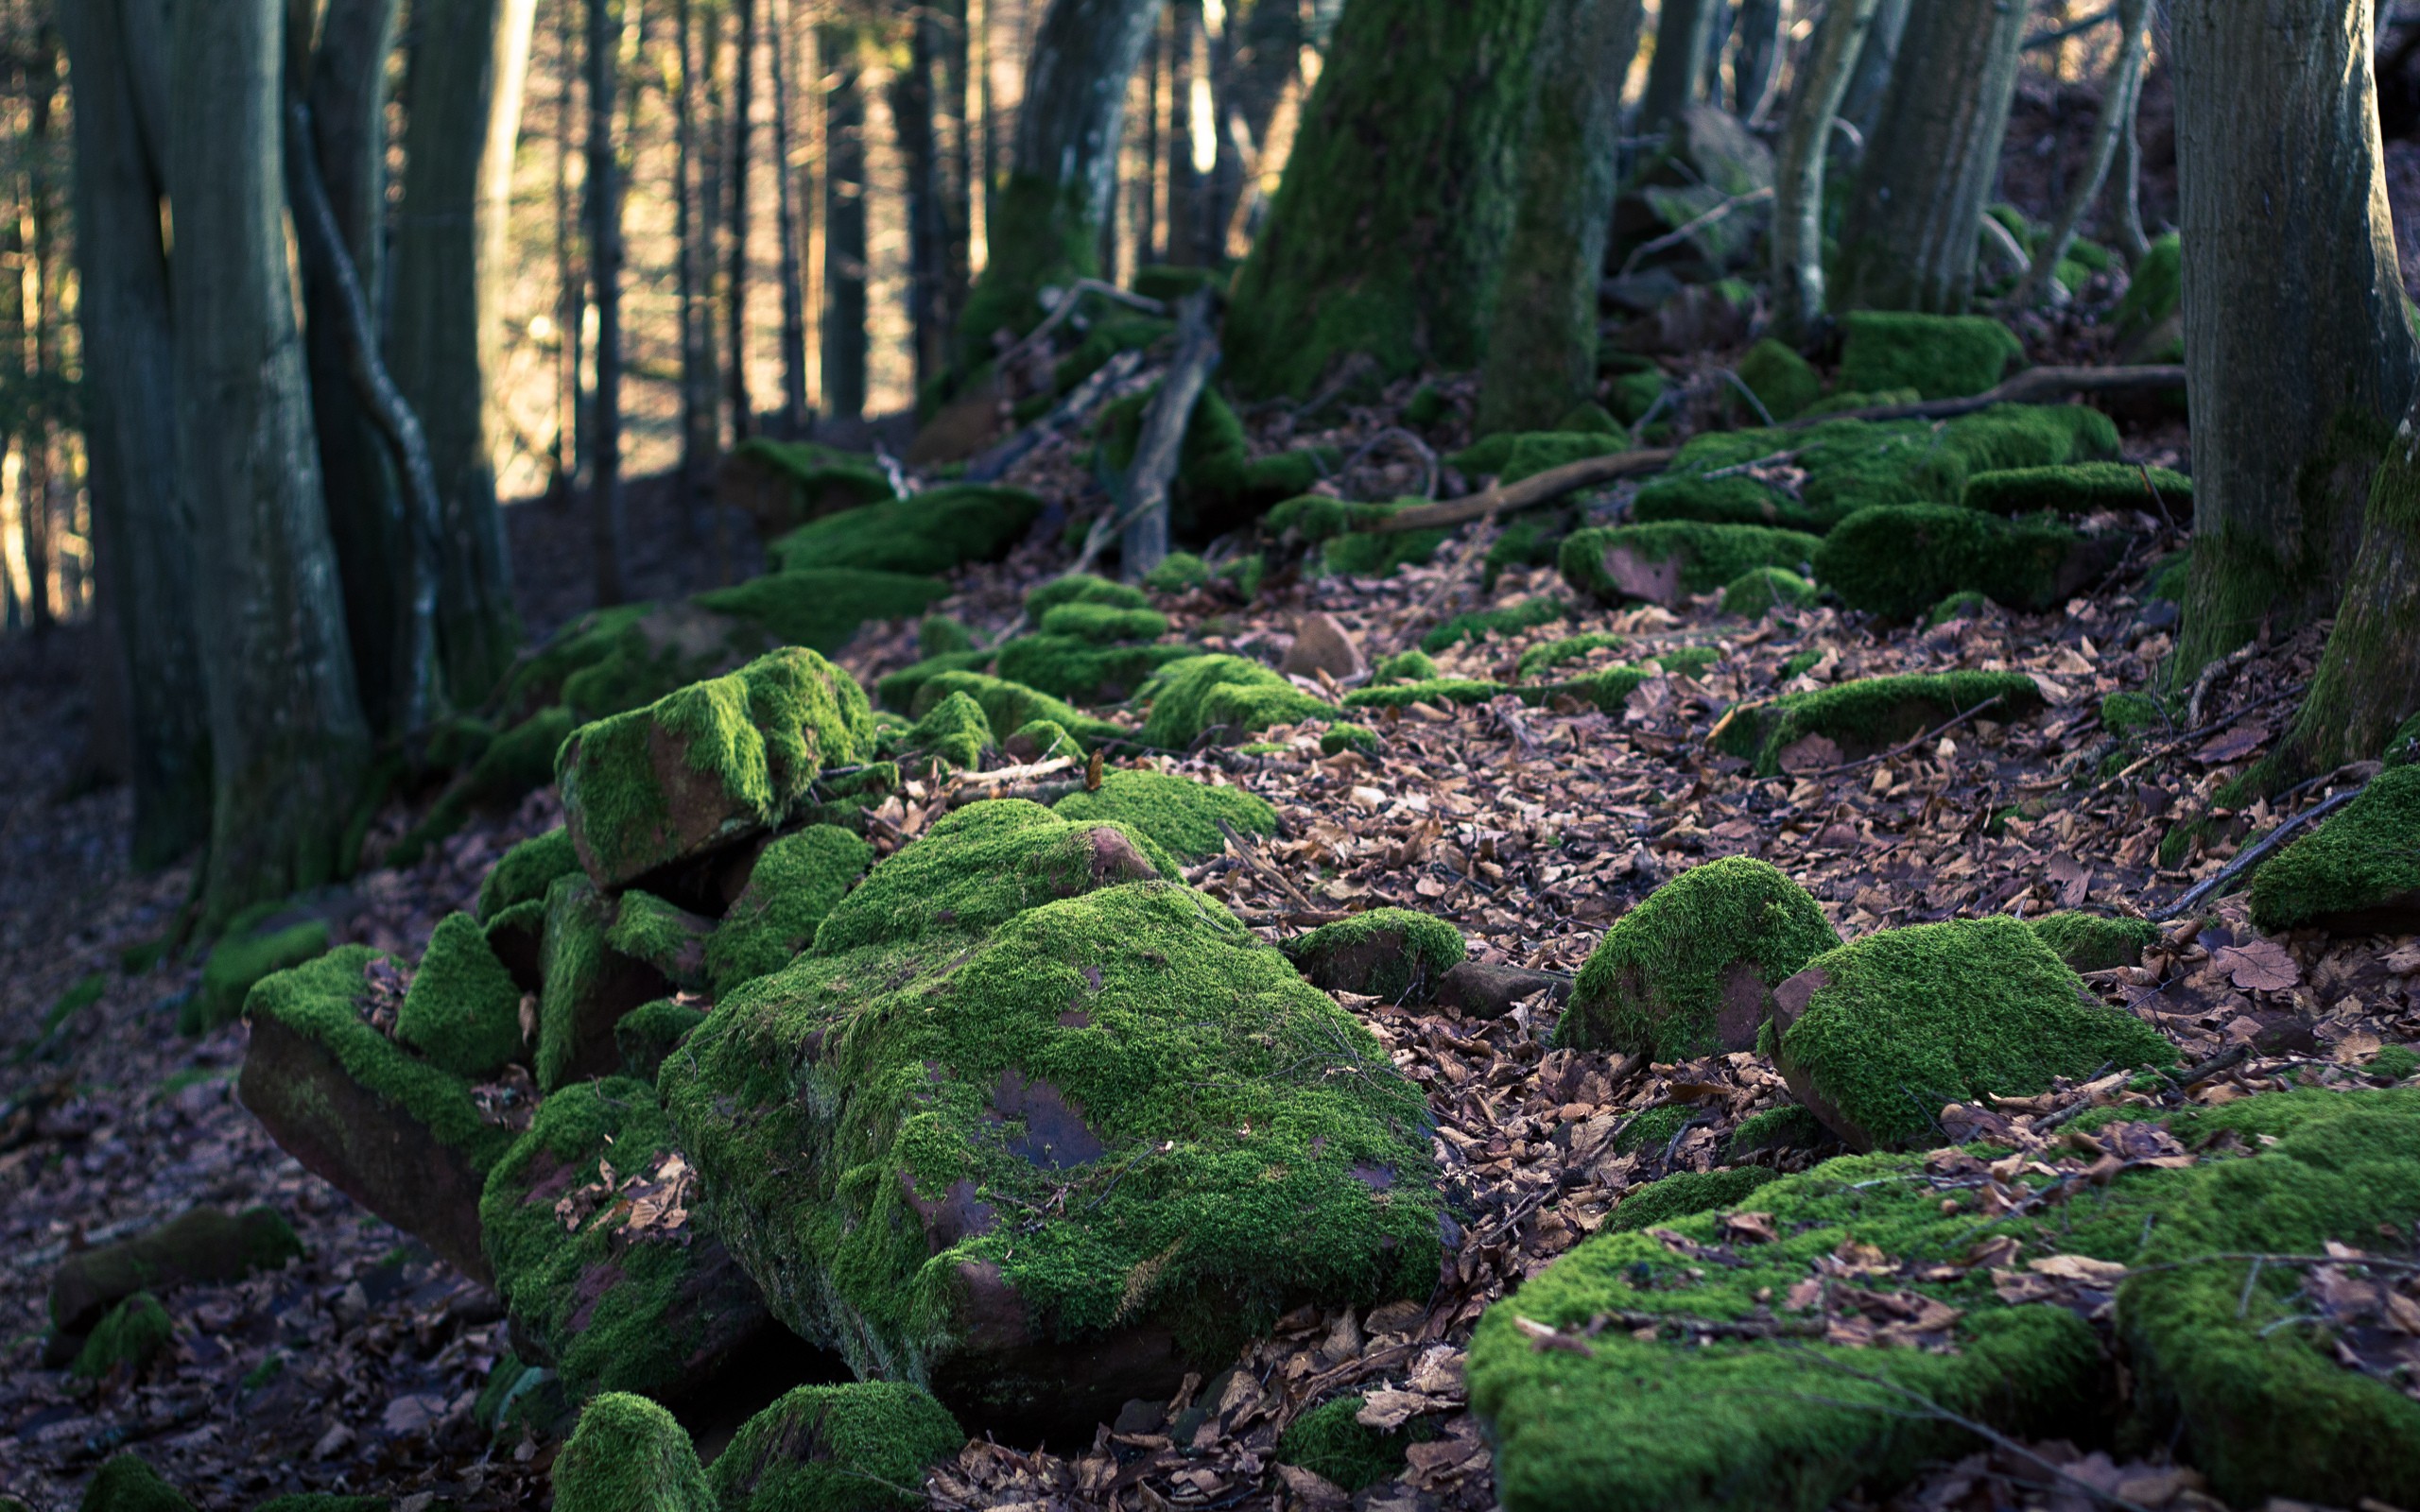 General 2560x1600 landscape moss forest trees plants fallen leaves stones